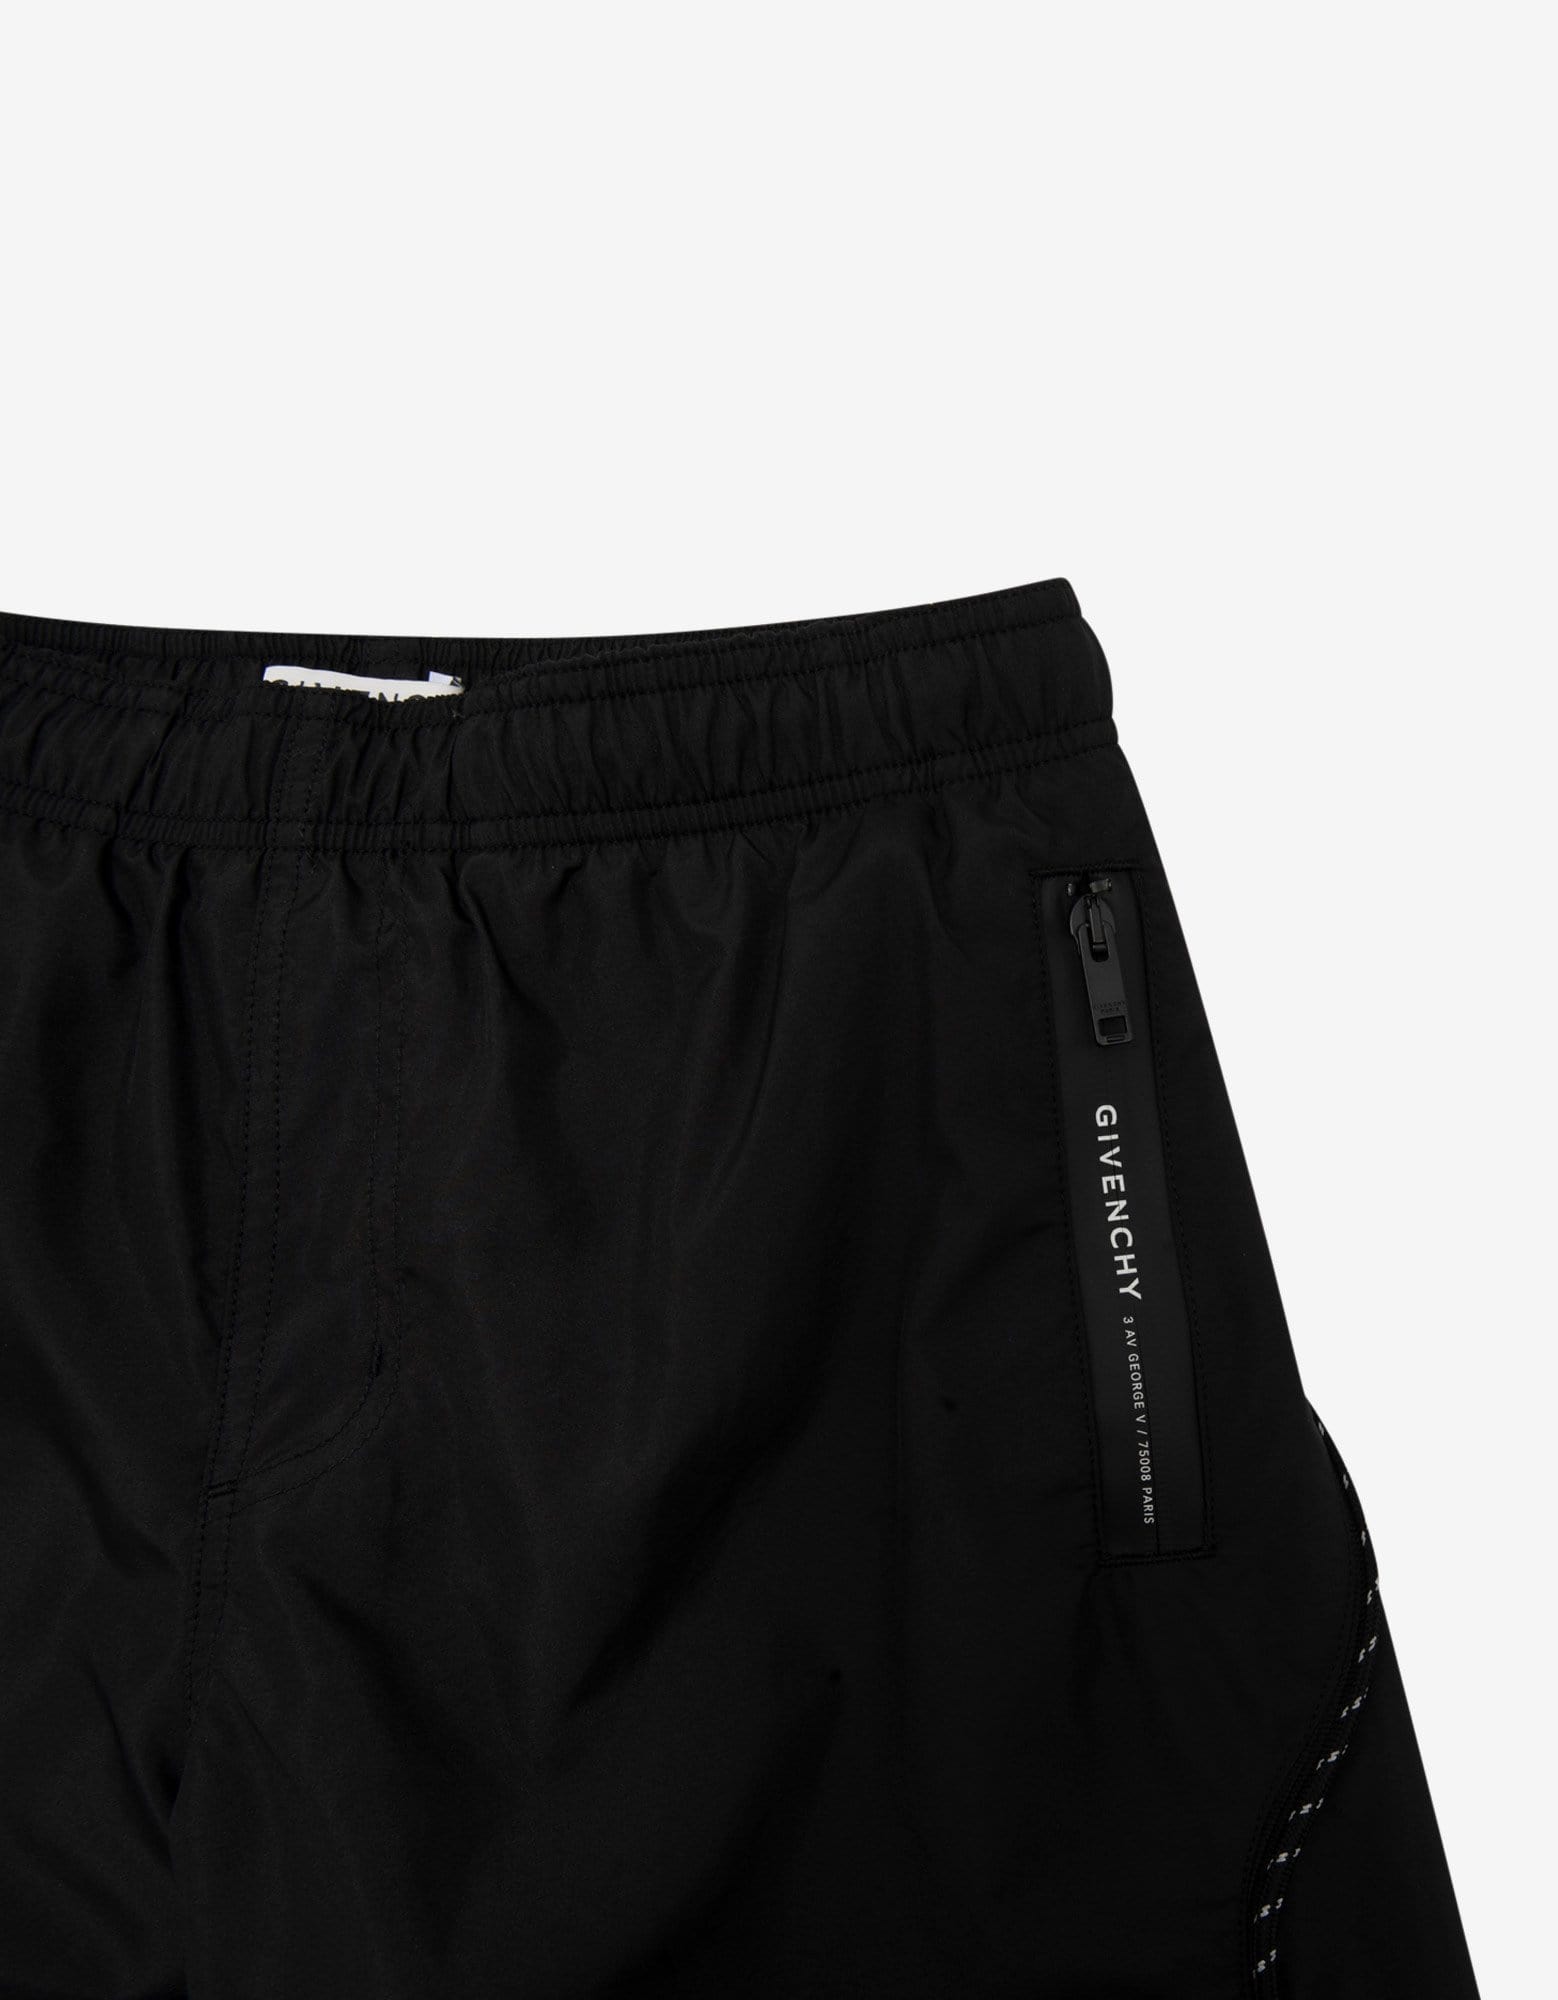 Givenchy Black Lace Detail Swim Shorts